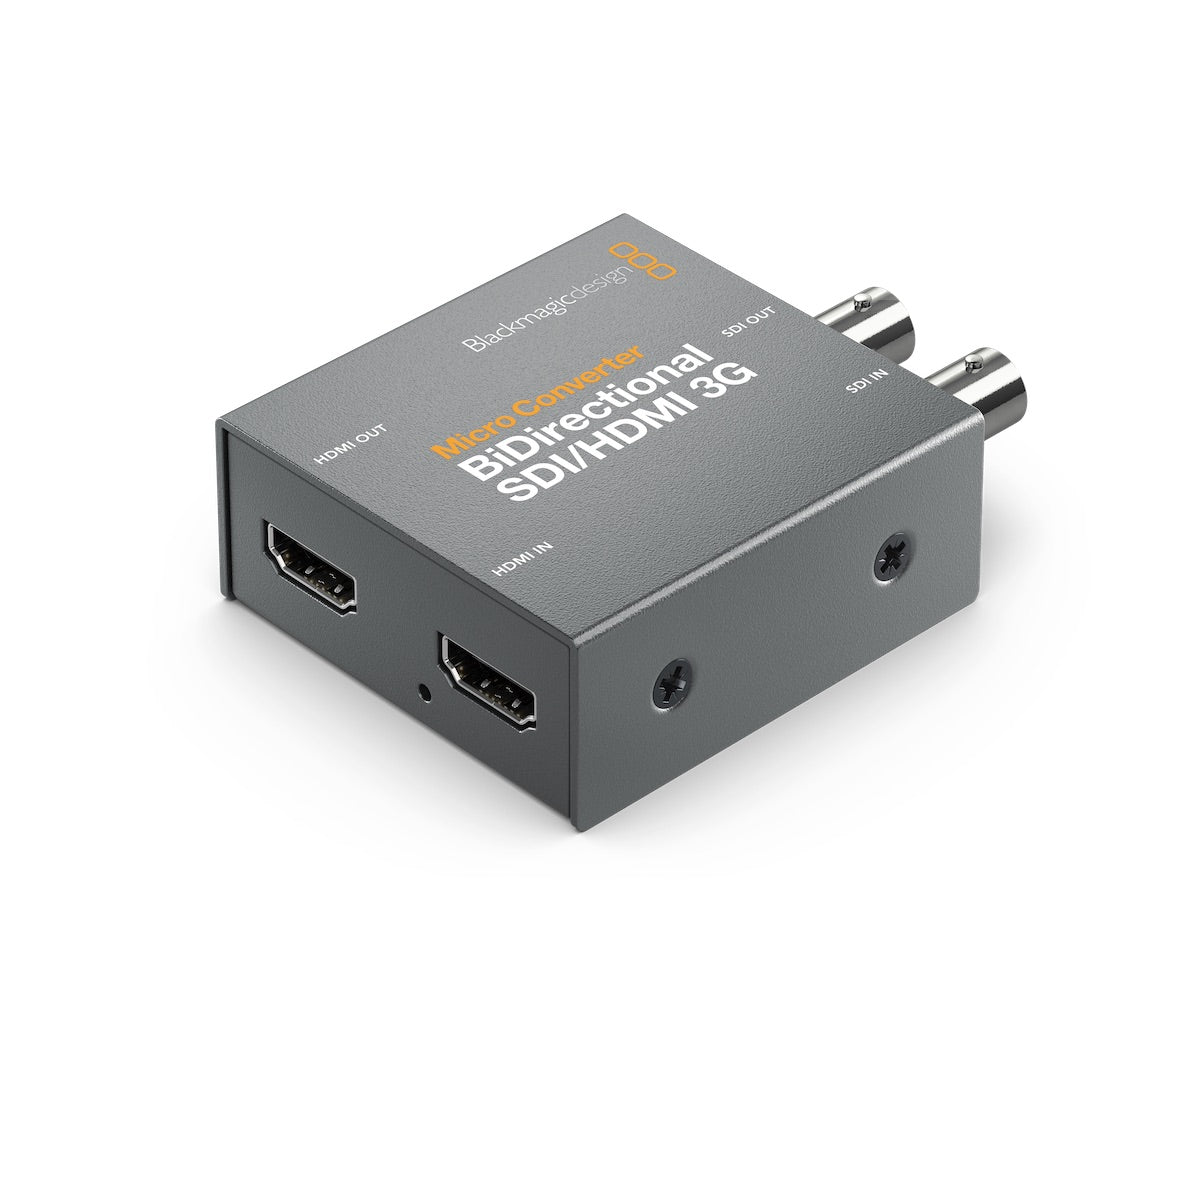 Blackmagic Micro Converter - BiDirectional SDI/HDMI 3G with PSU, left